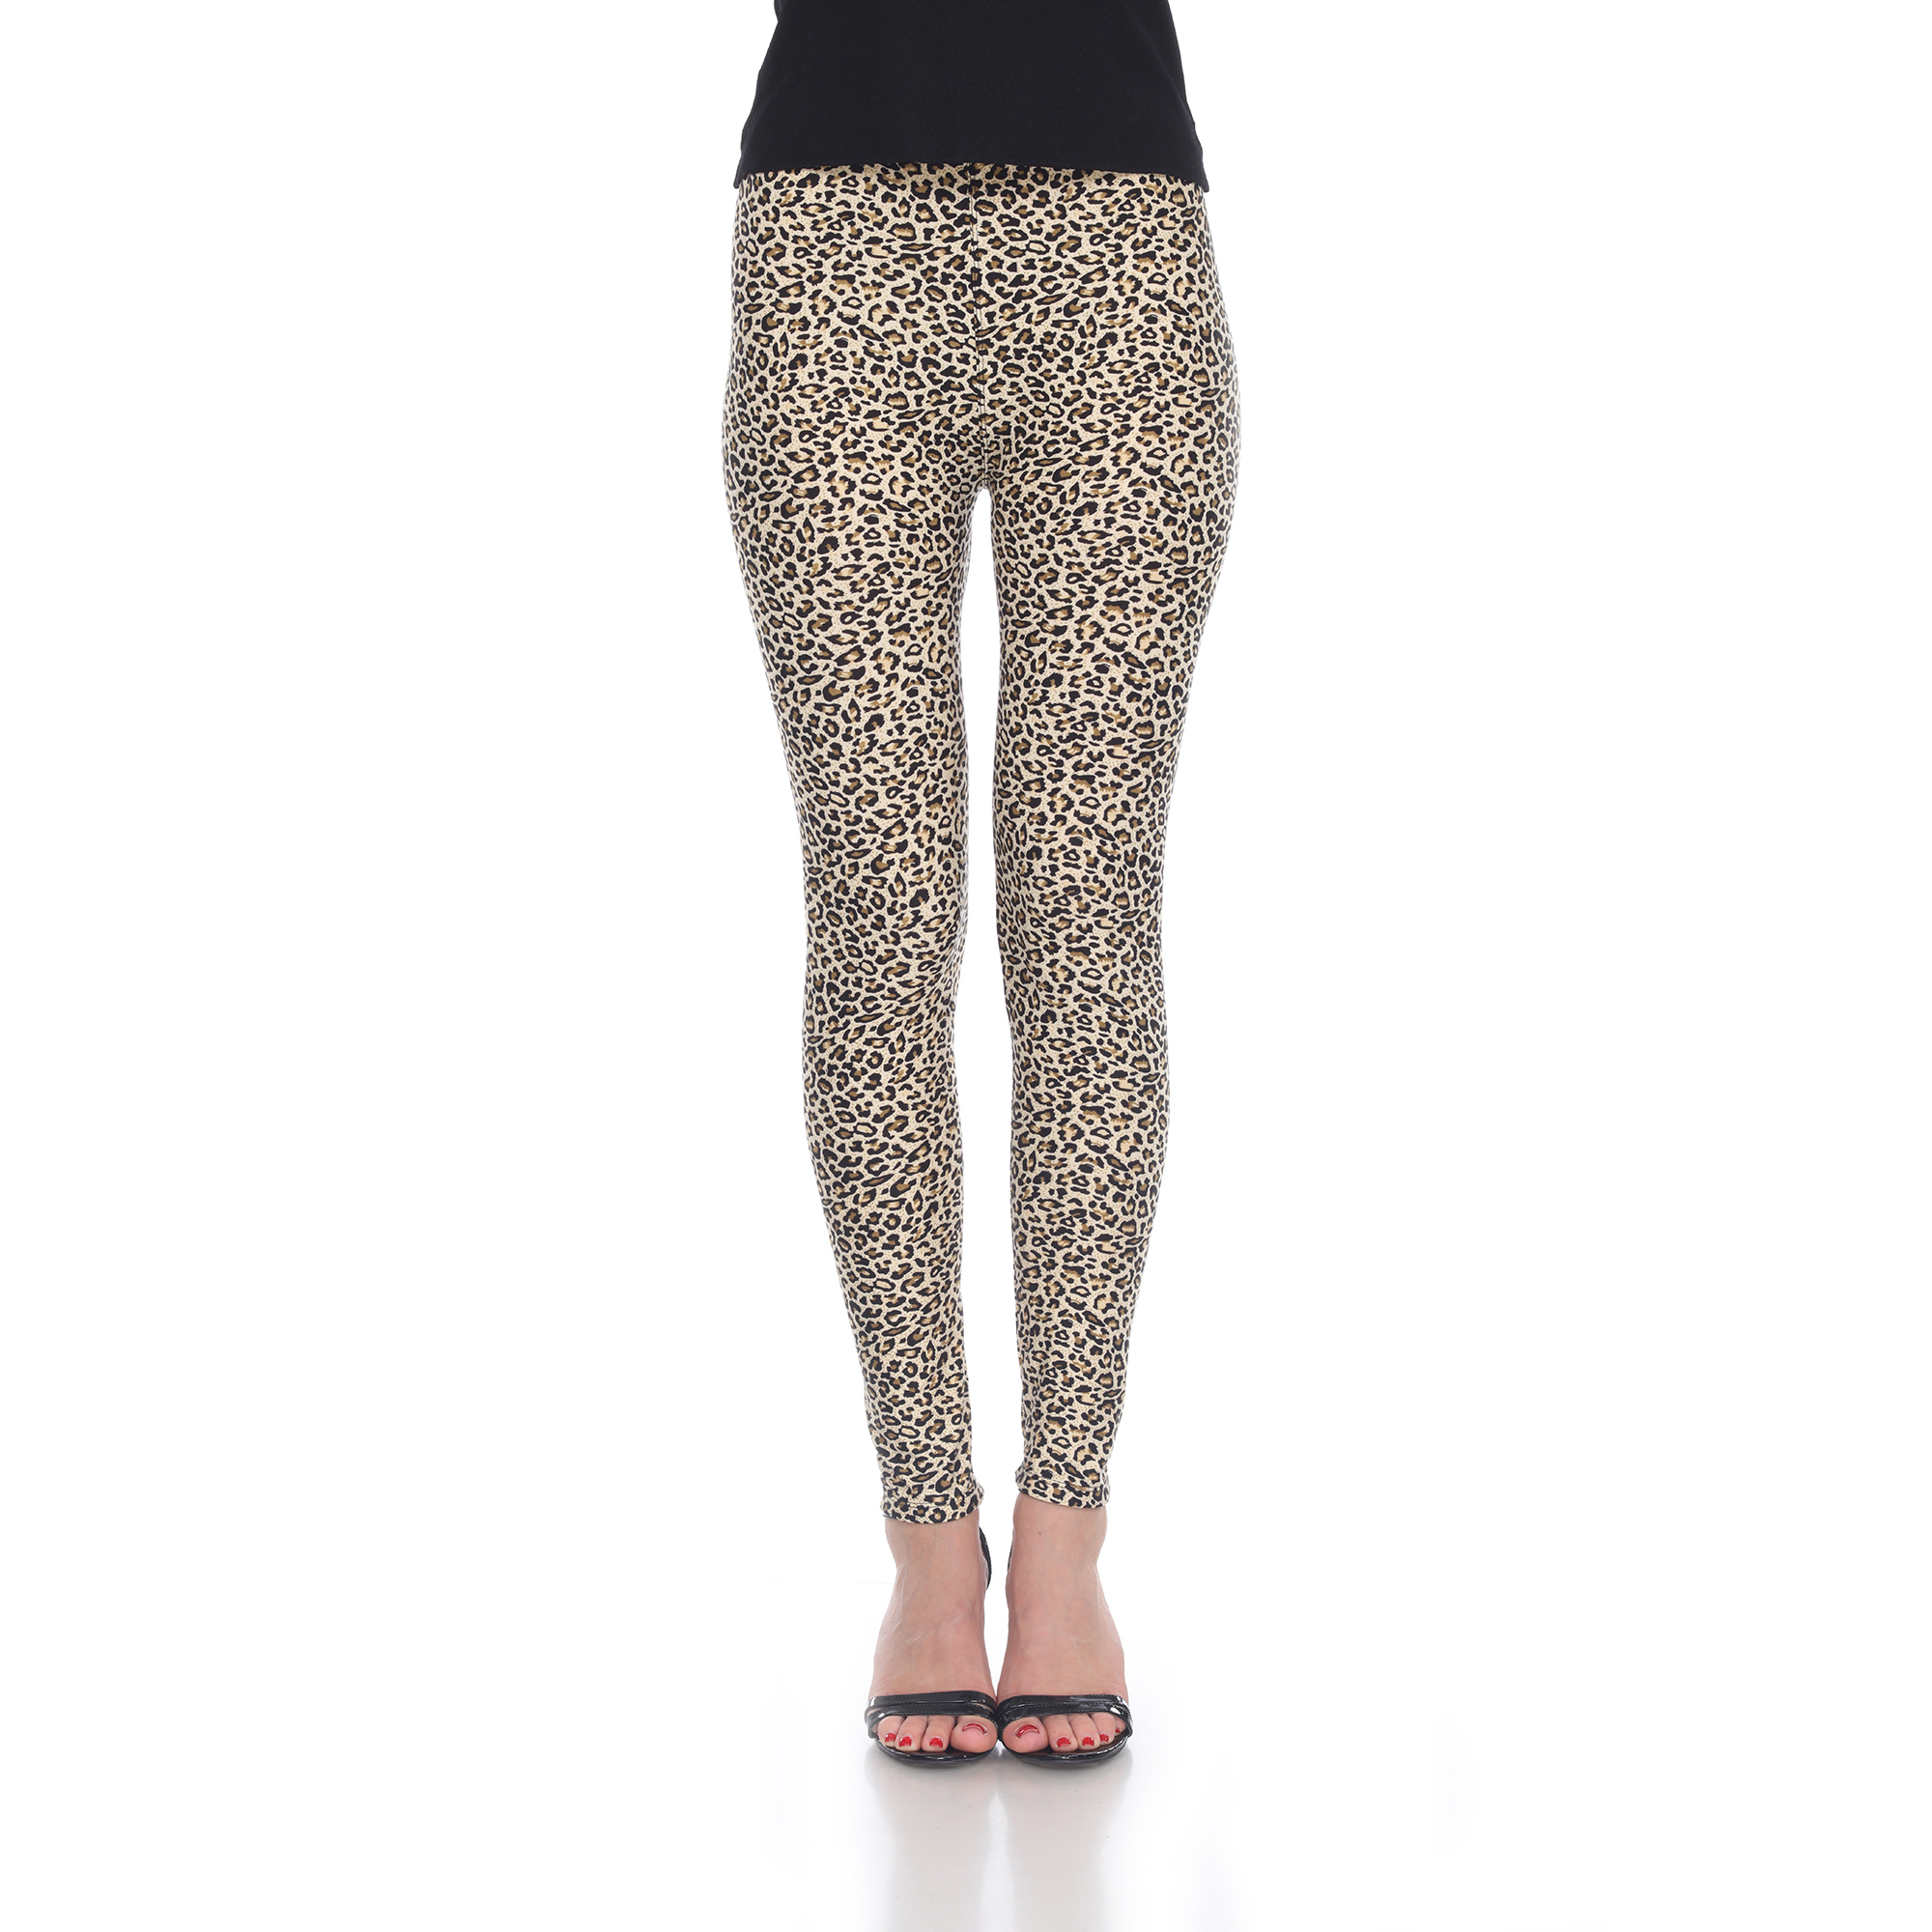 White Mark Women's Animal Print Stretch Leggings - Brown Cheetah, One Size